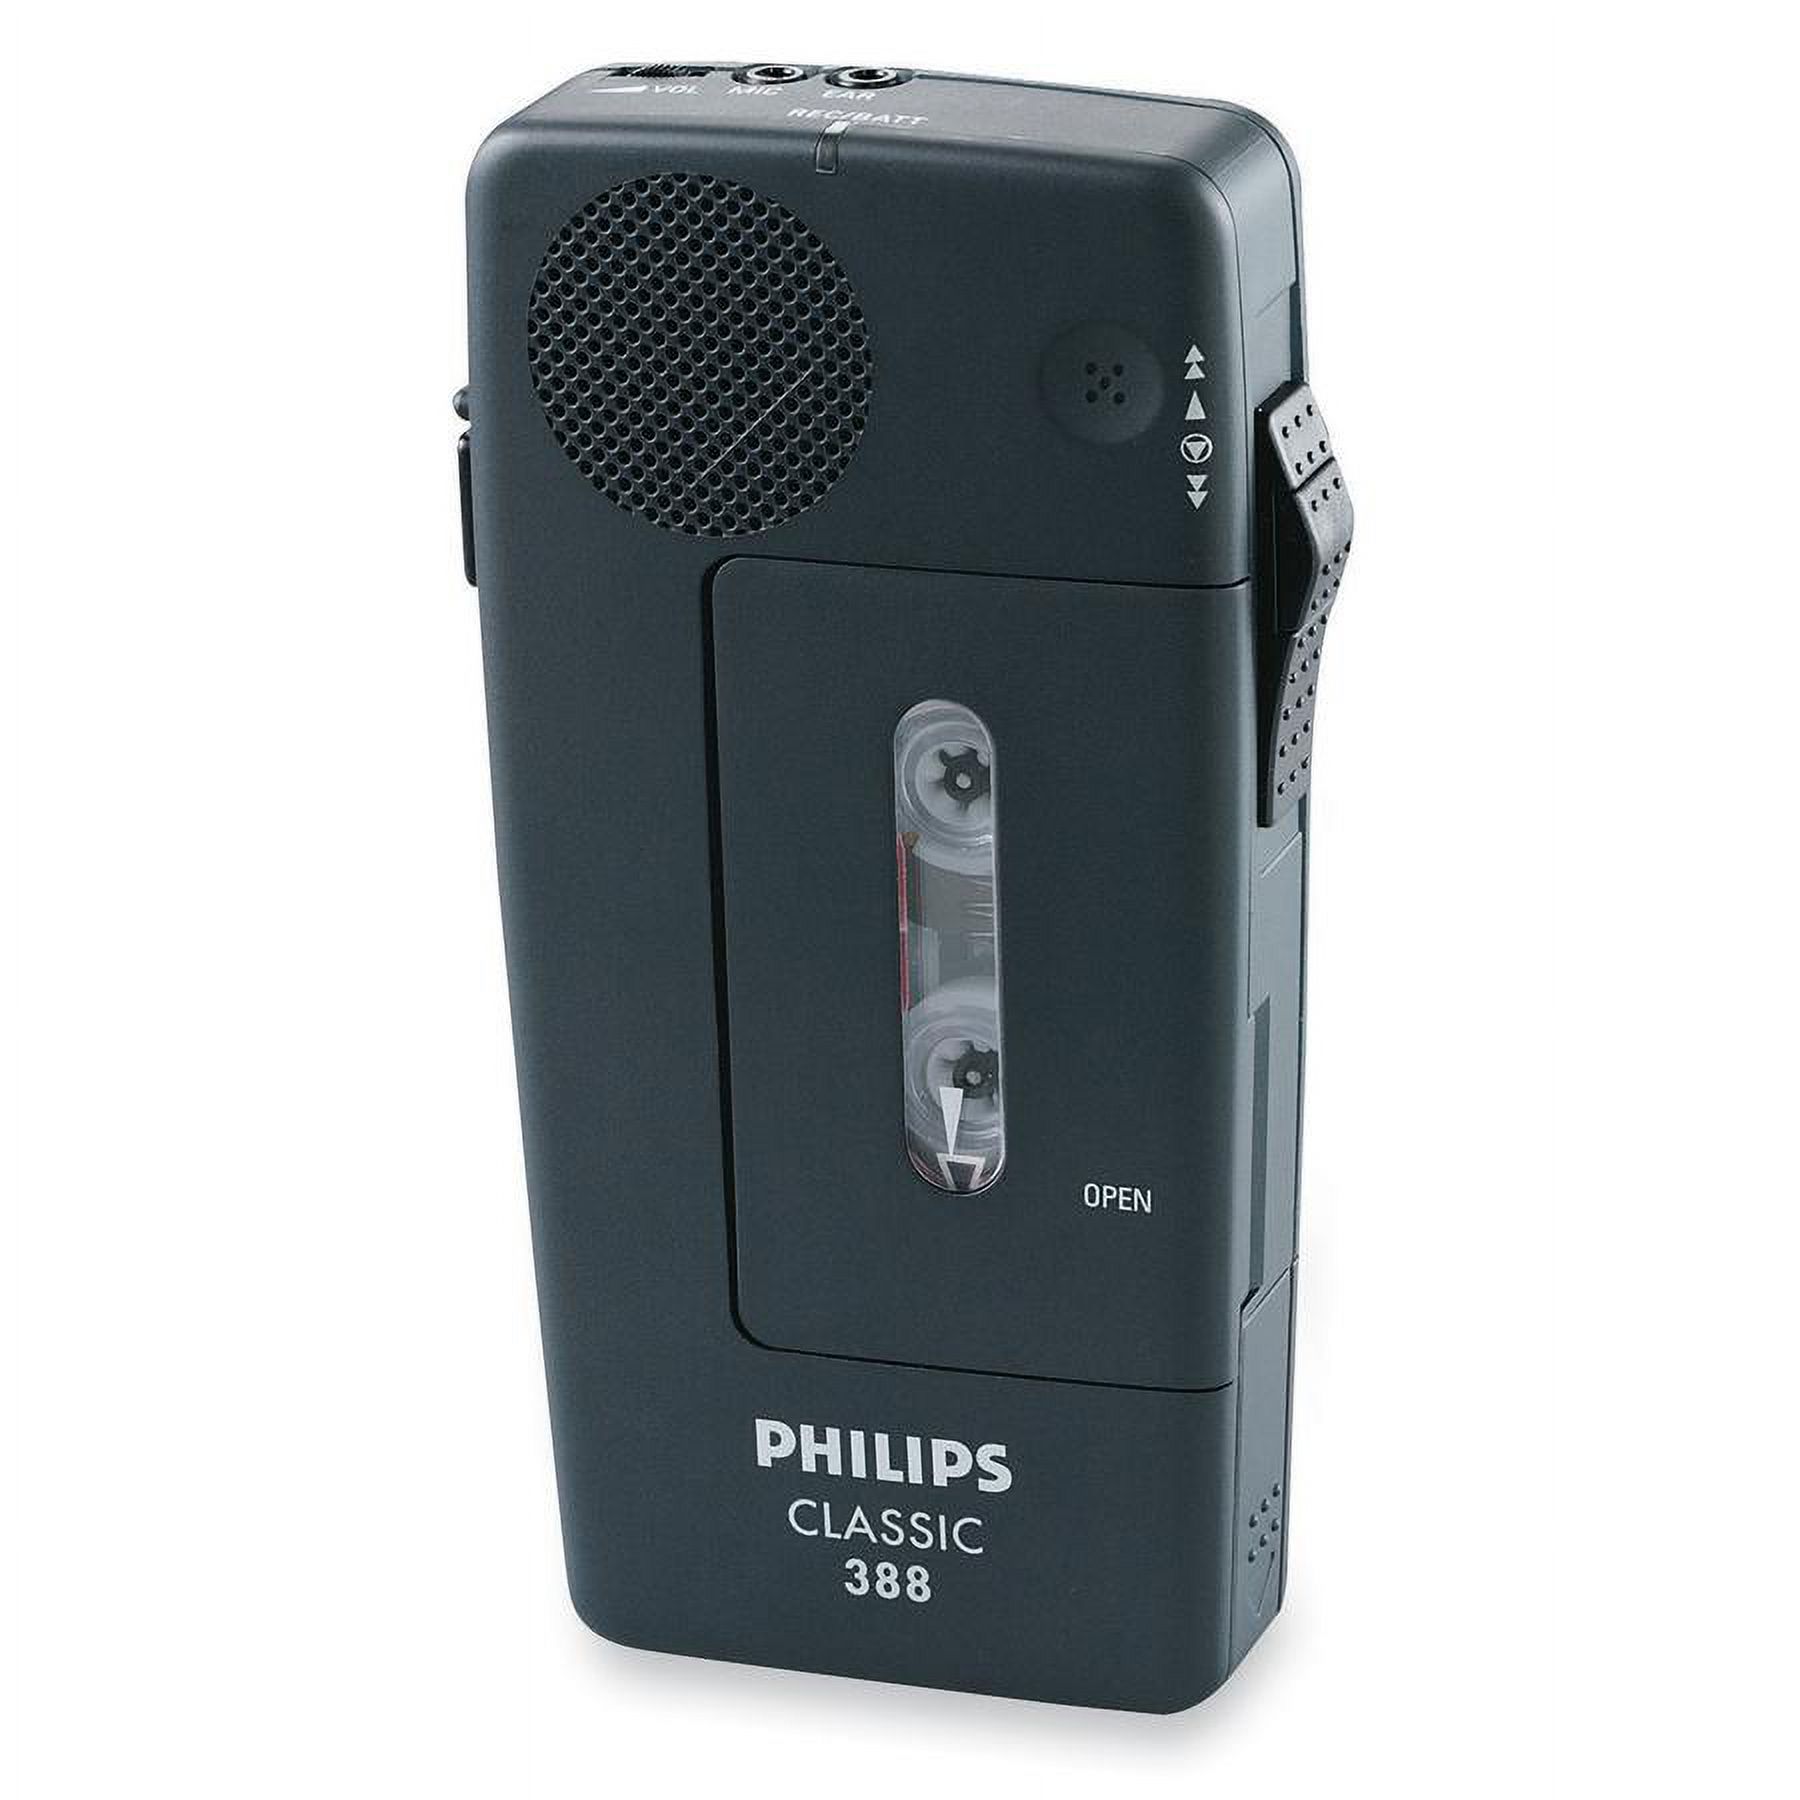 Philips Speech Processing Pocket Memo 388 Slide Switch Mini Cassette Dictation Recorder - image 2 of 2